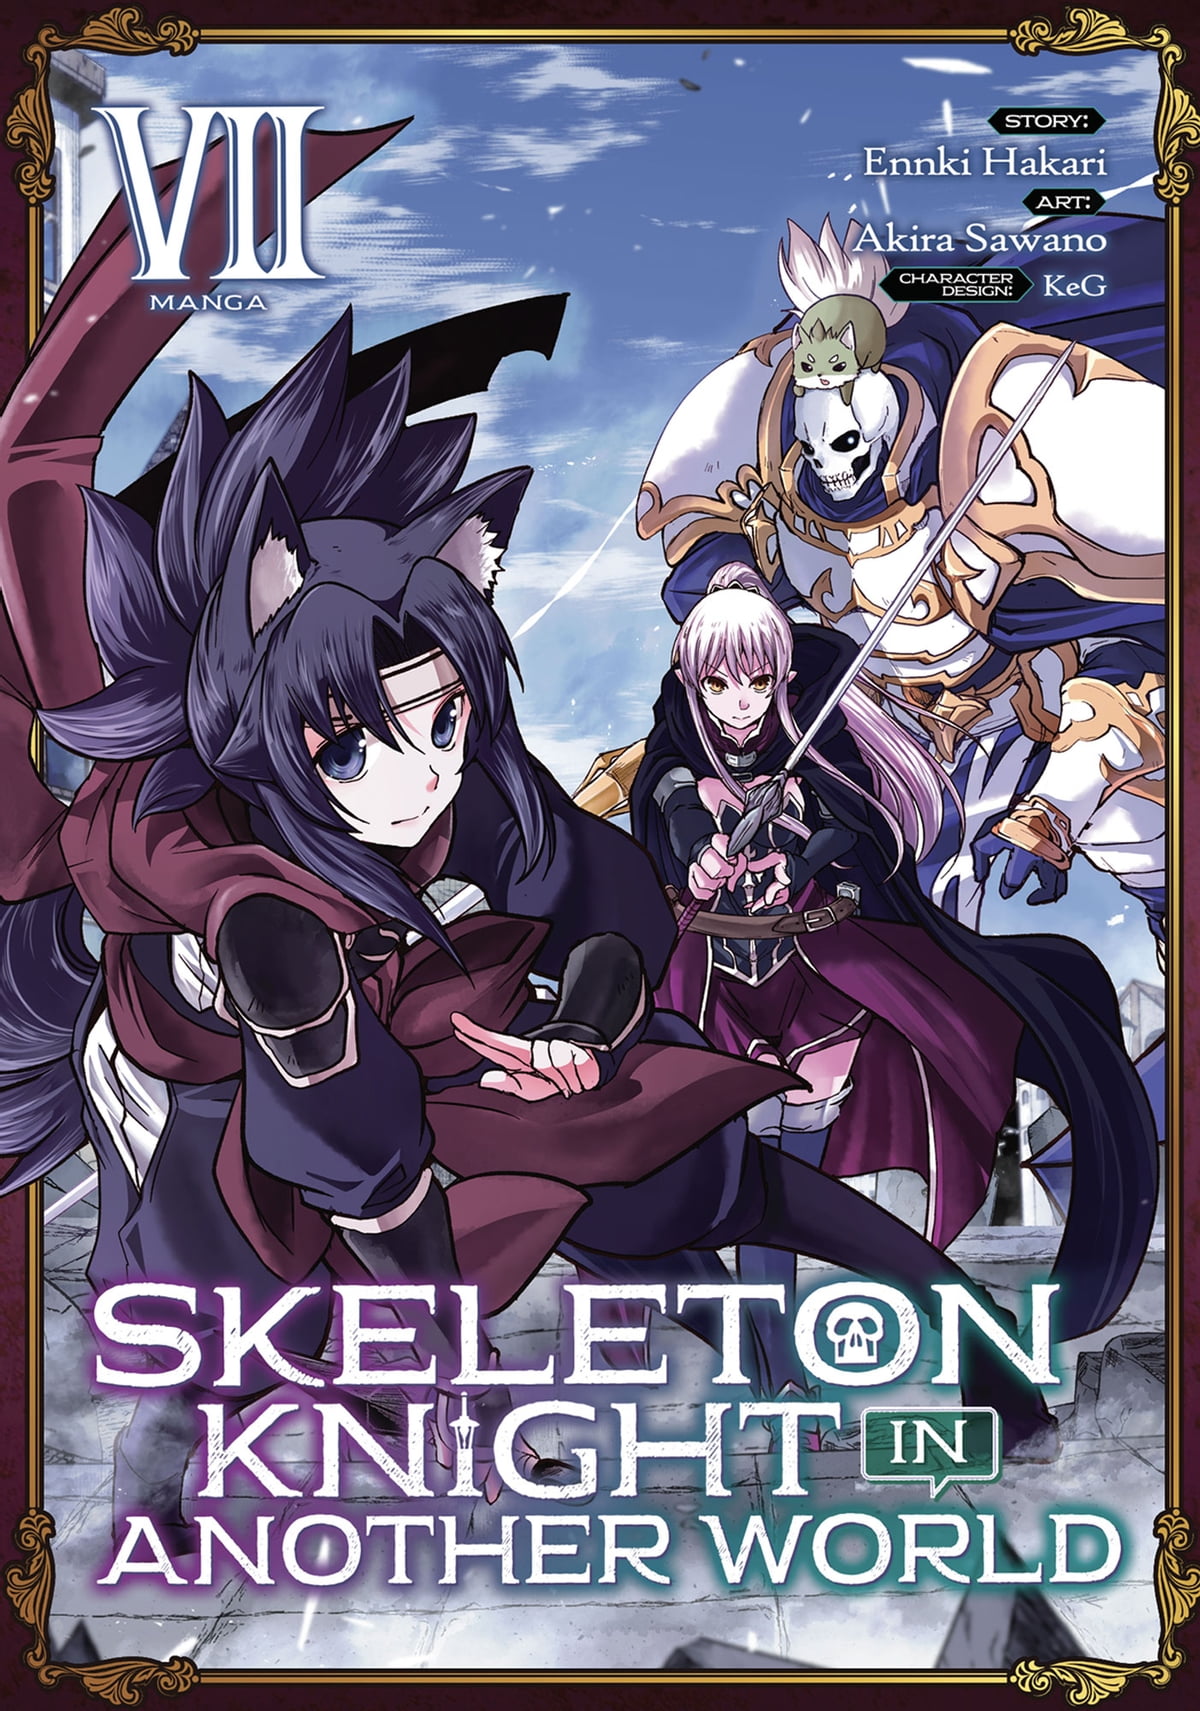 Skeleton Knight In Another World Manga Vol Ebook By Ennki